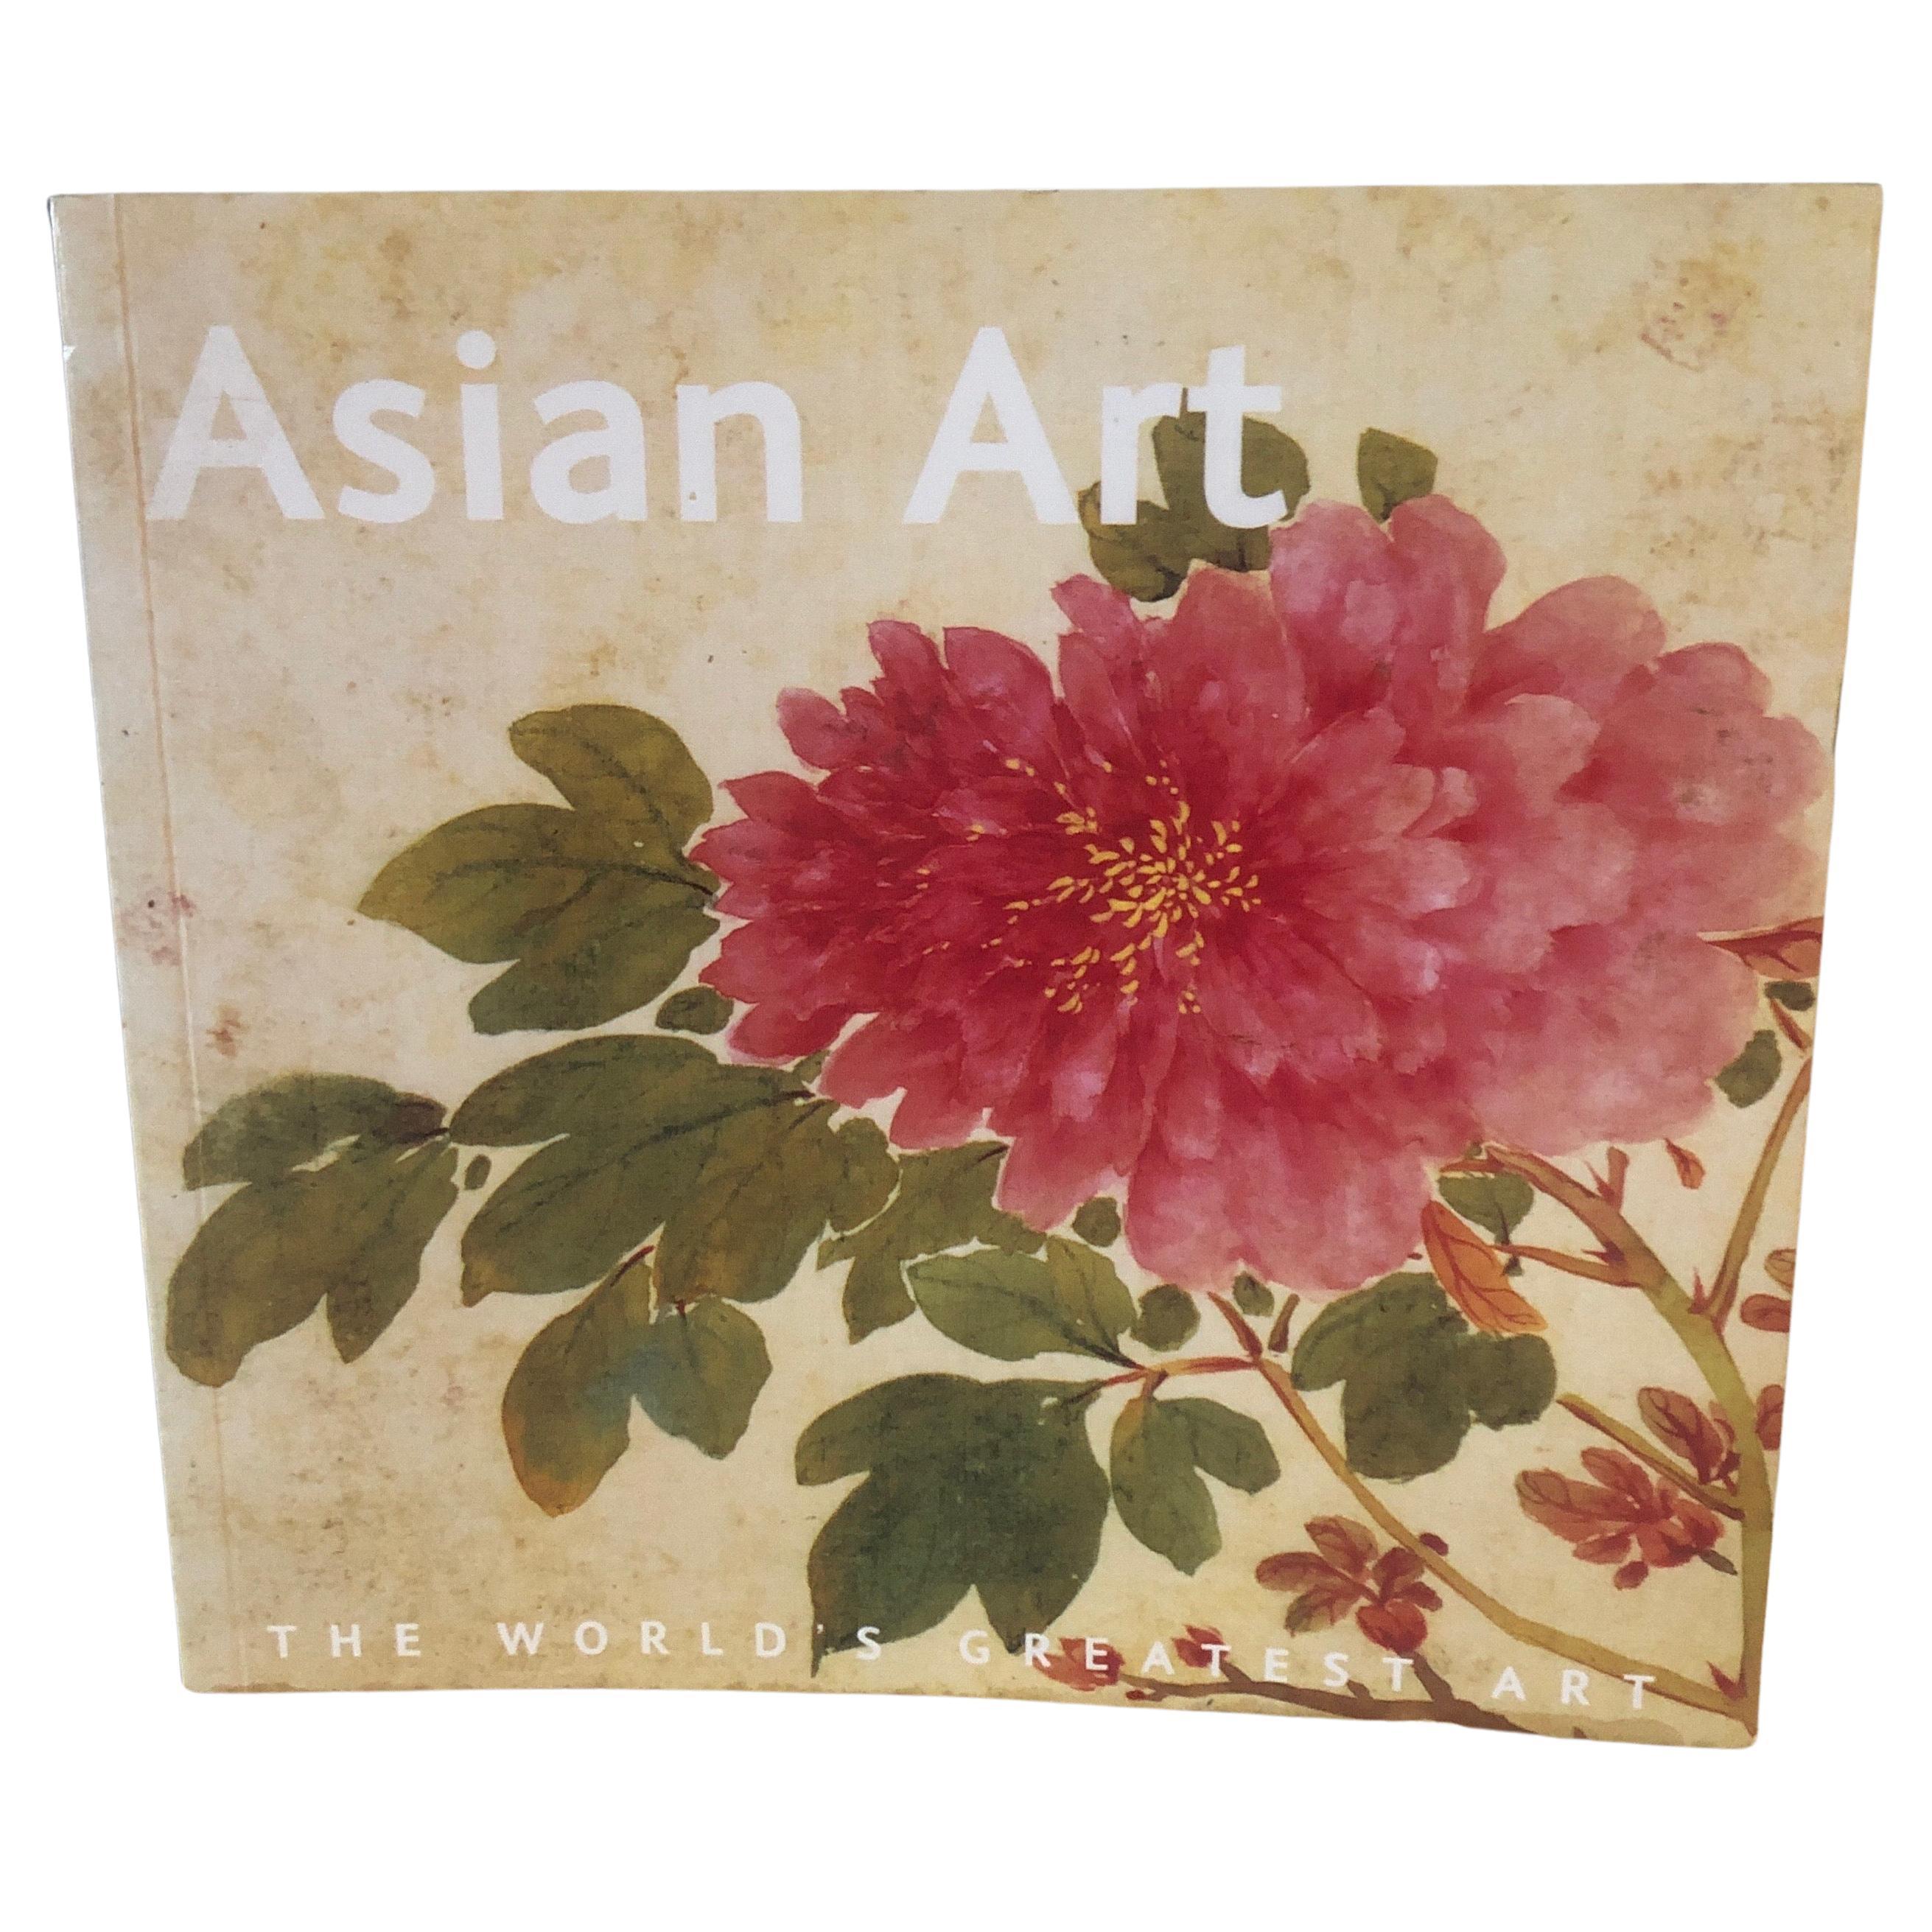 Asian Art The World's Greatest Art Decorating Book